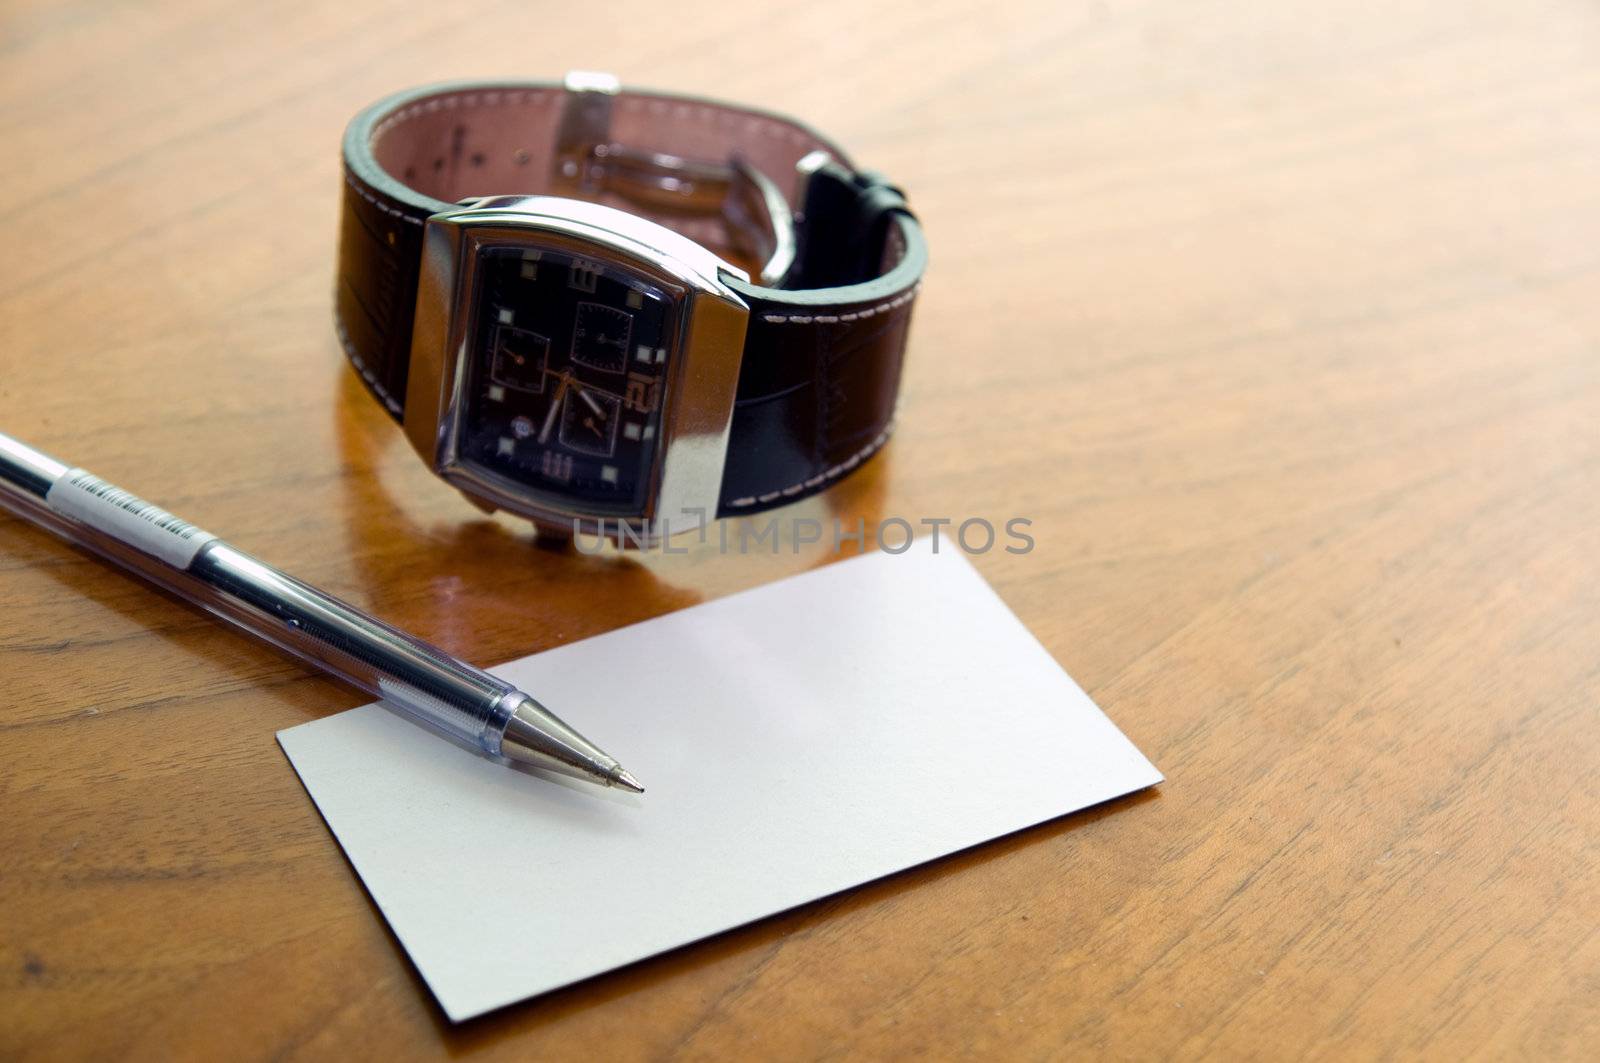 Modern business desk with watch, pen, business card